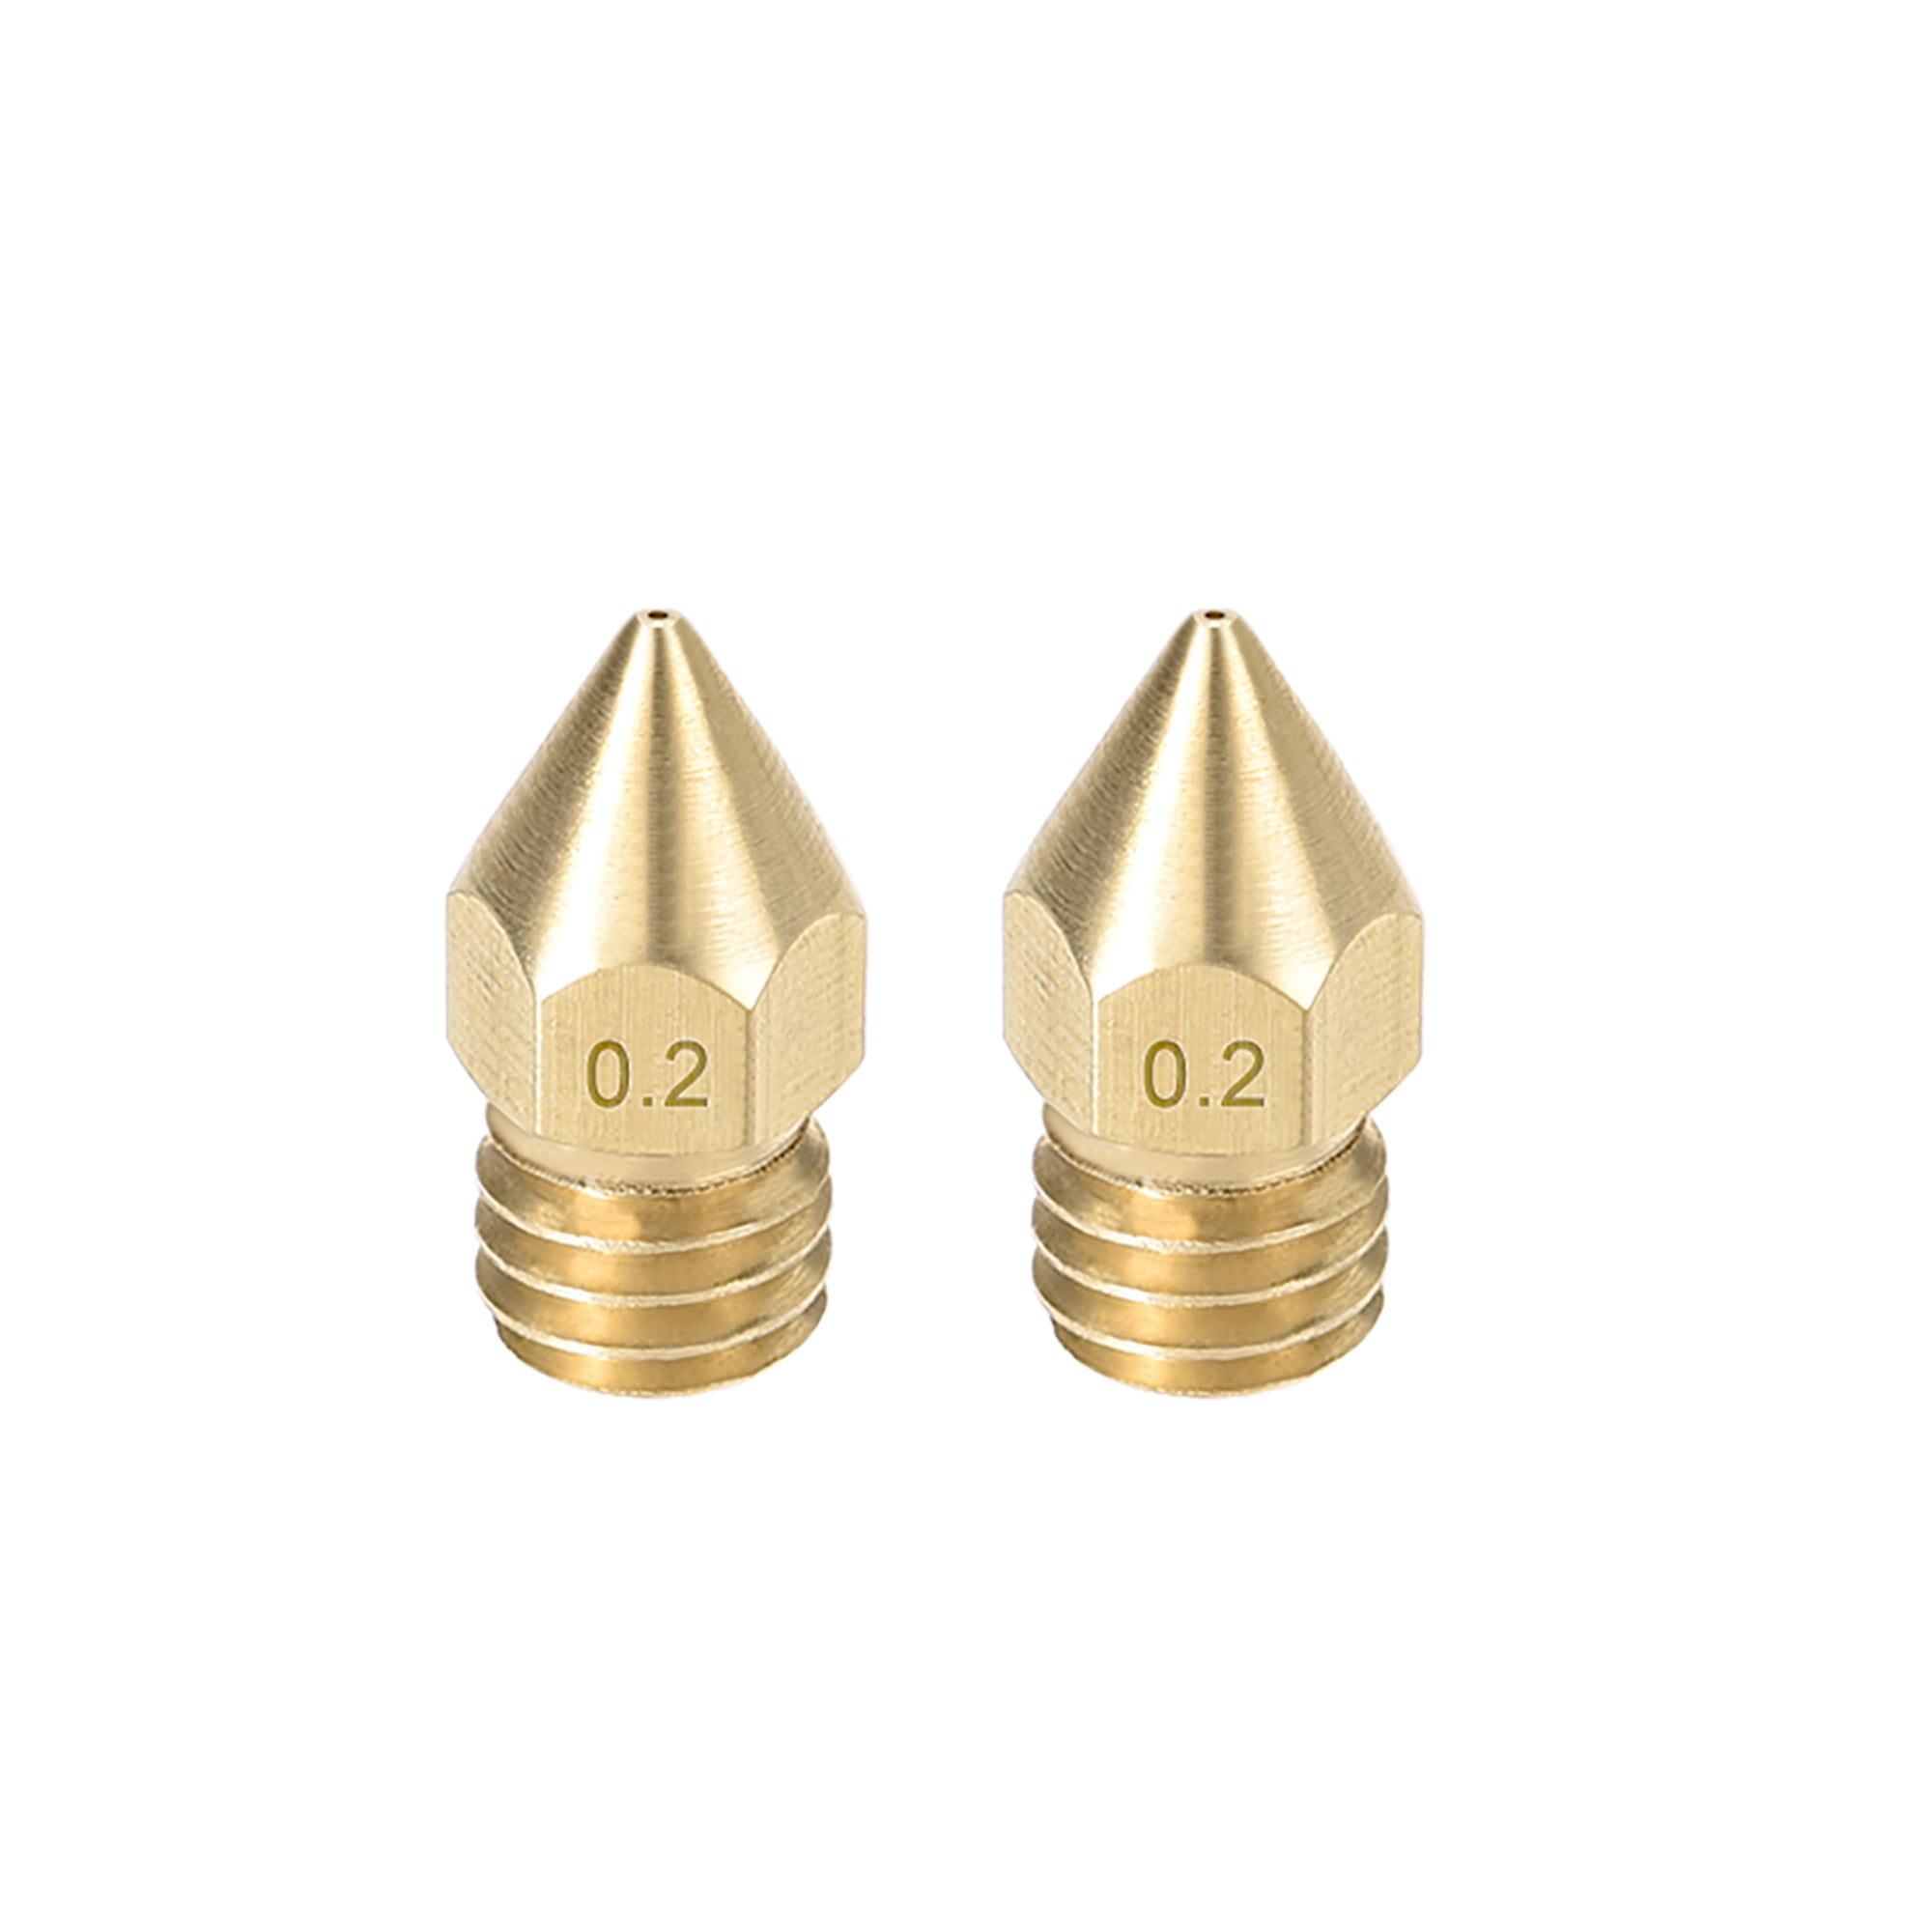 4x 0.25mm Full Metal Brass Extruder Nozzle Print Head for 3D Printer 1.75mm 